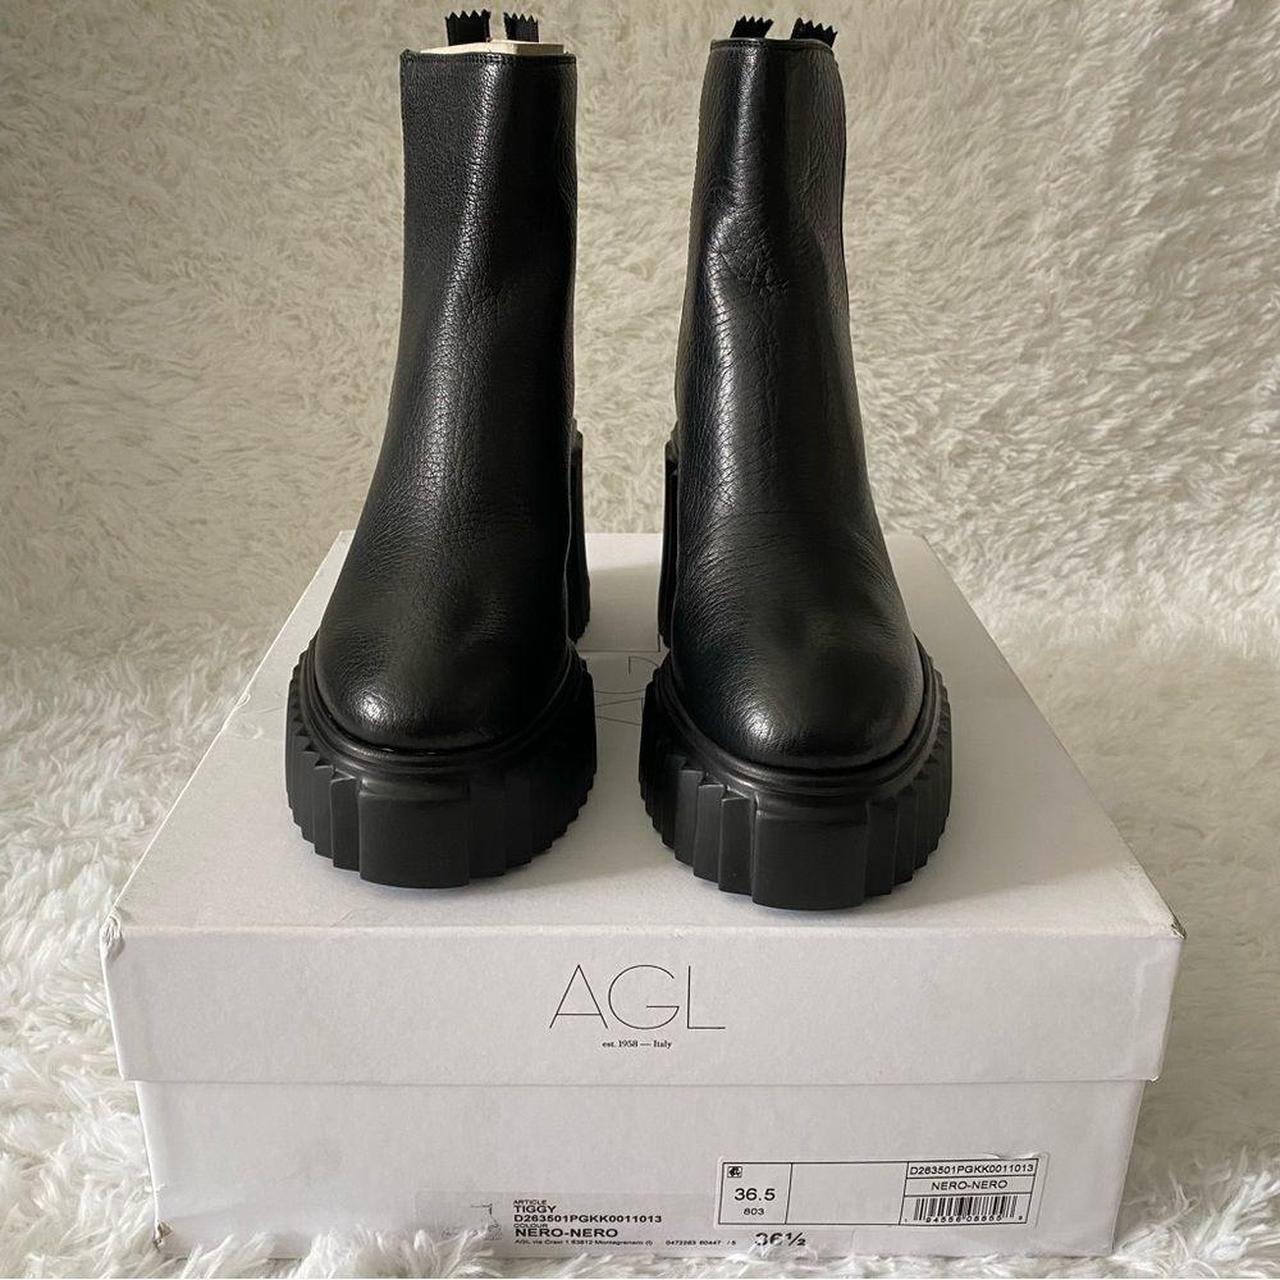 Product Image 2 - New In Box! AGL Tiggy